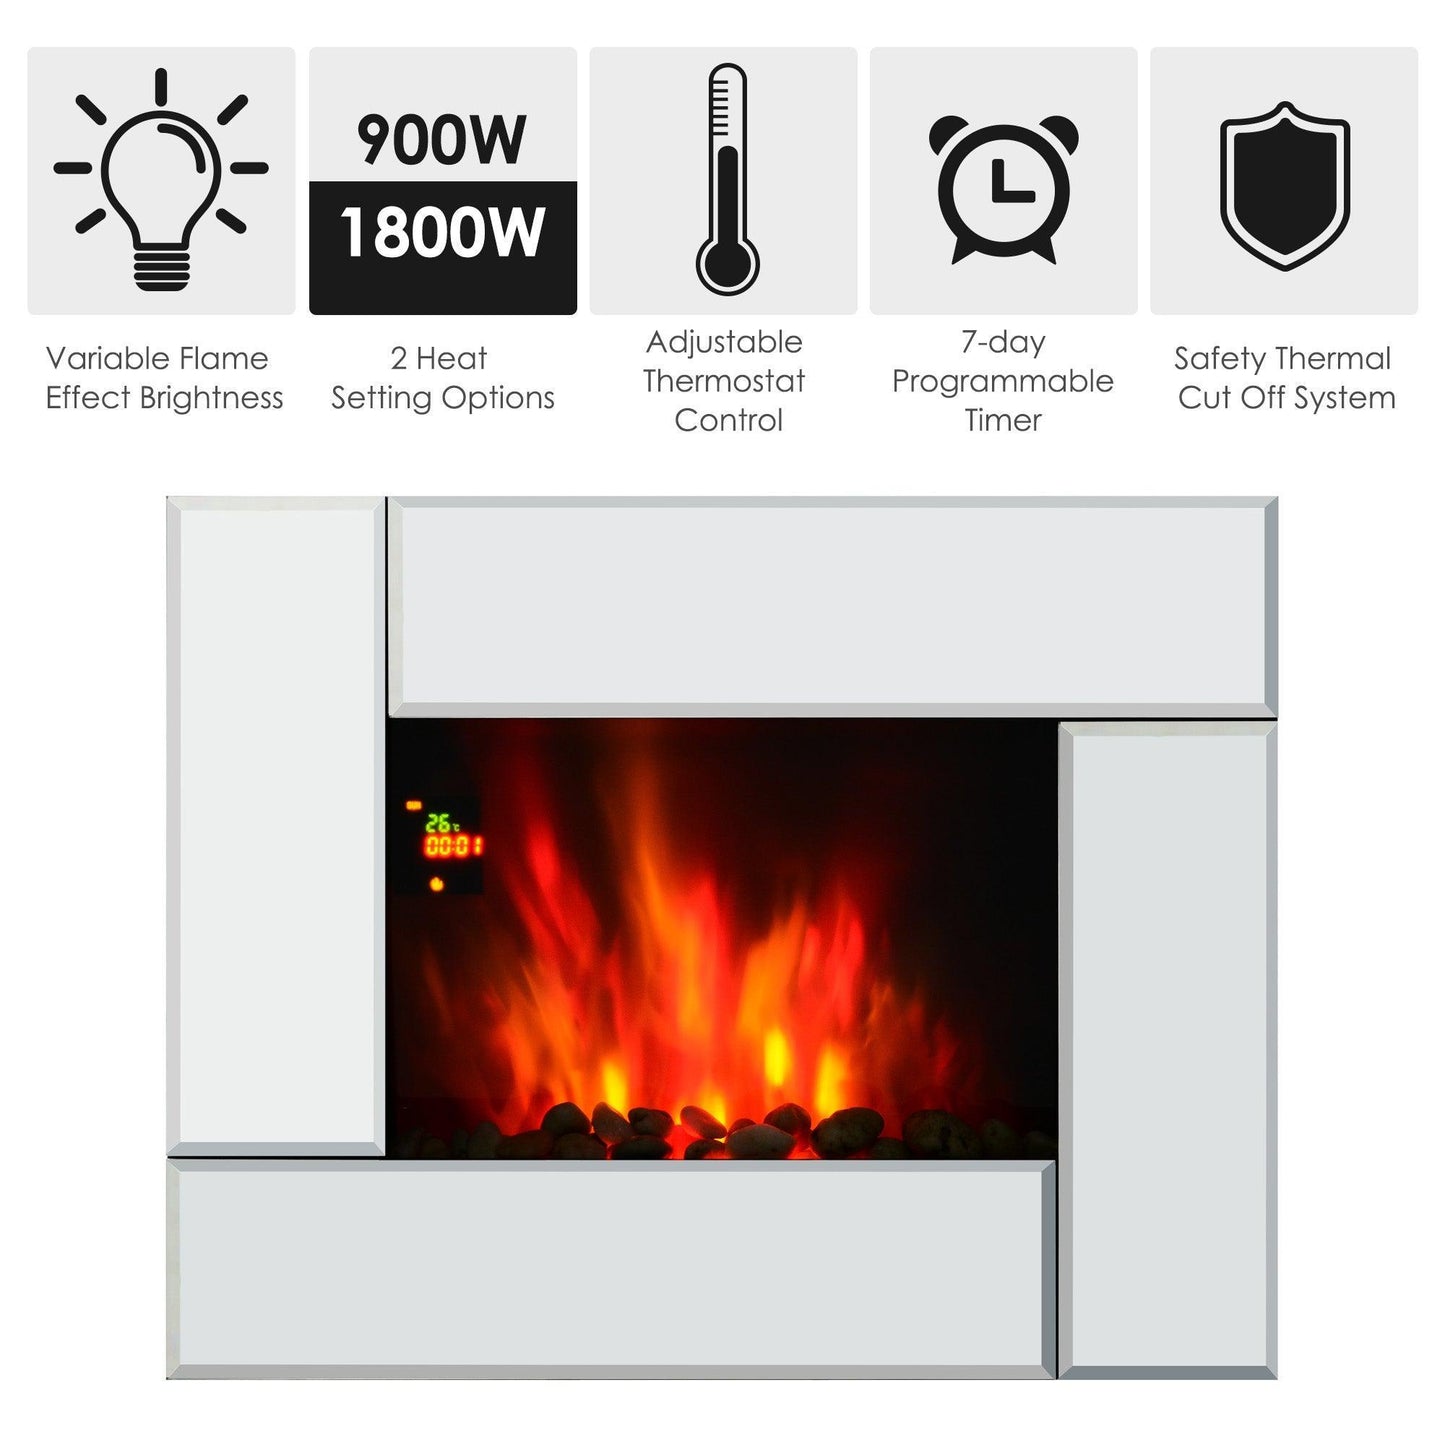 HOMCOM Wall Mounted Electric Fireplace Heater - 7 LED Options - ALL4U RETAILER LTD